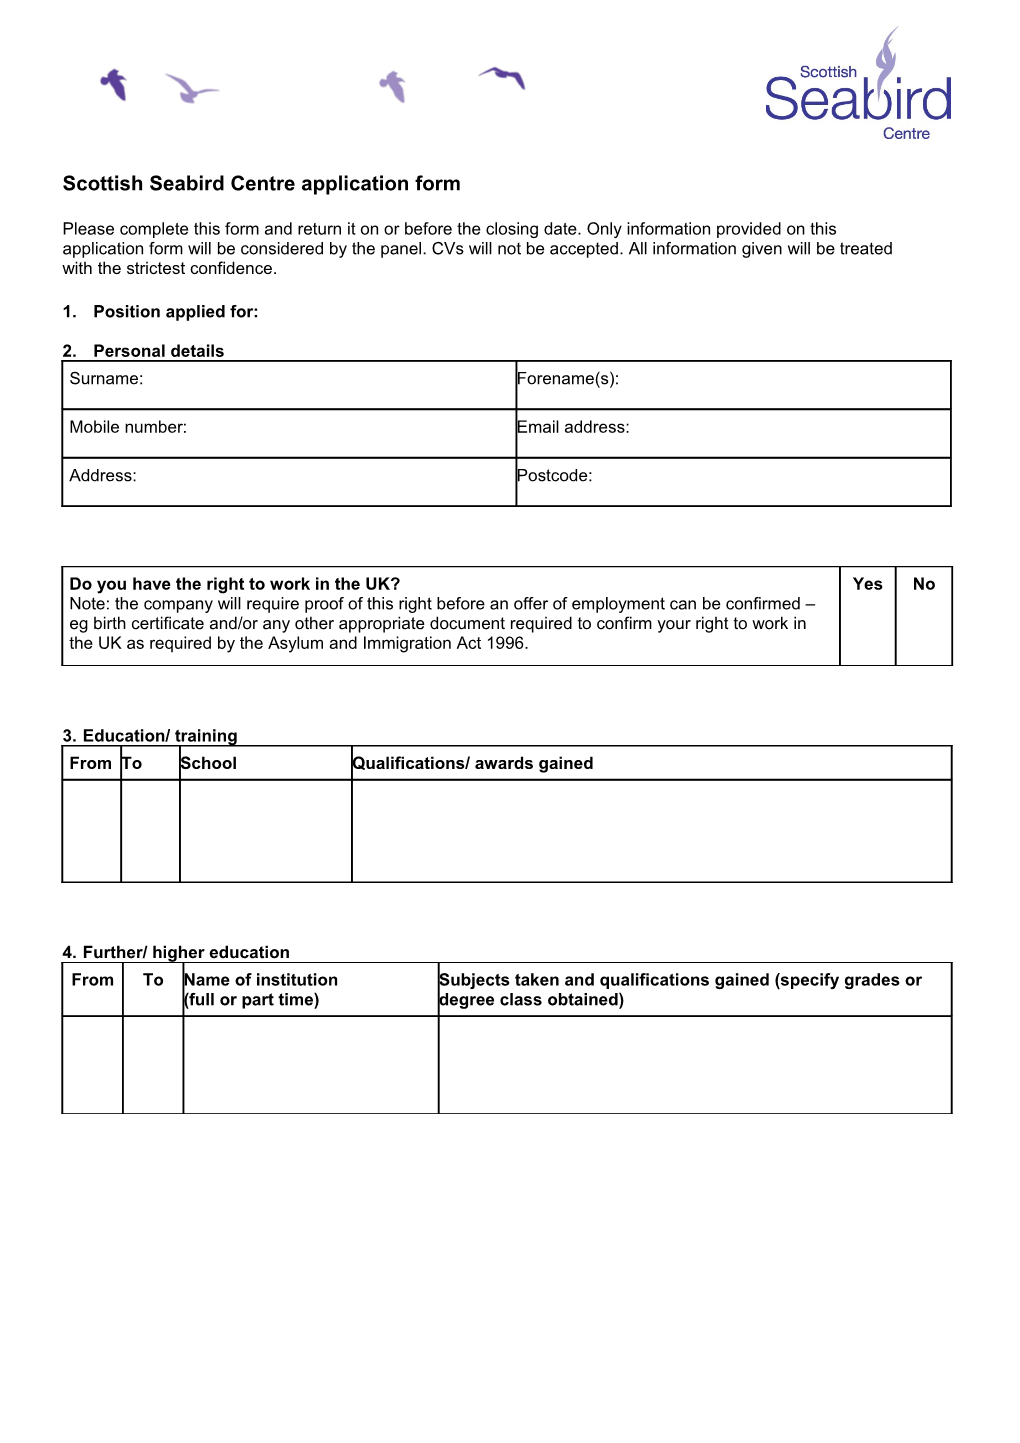 Scottish Seabird Centre Application Form